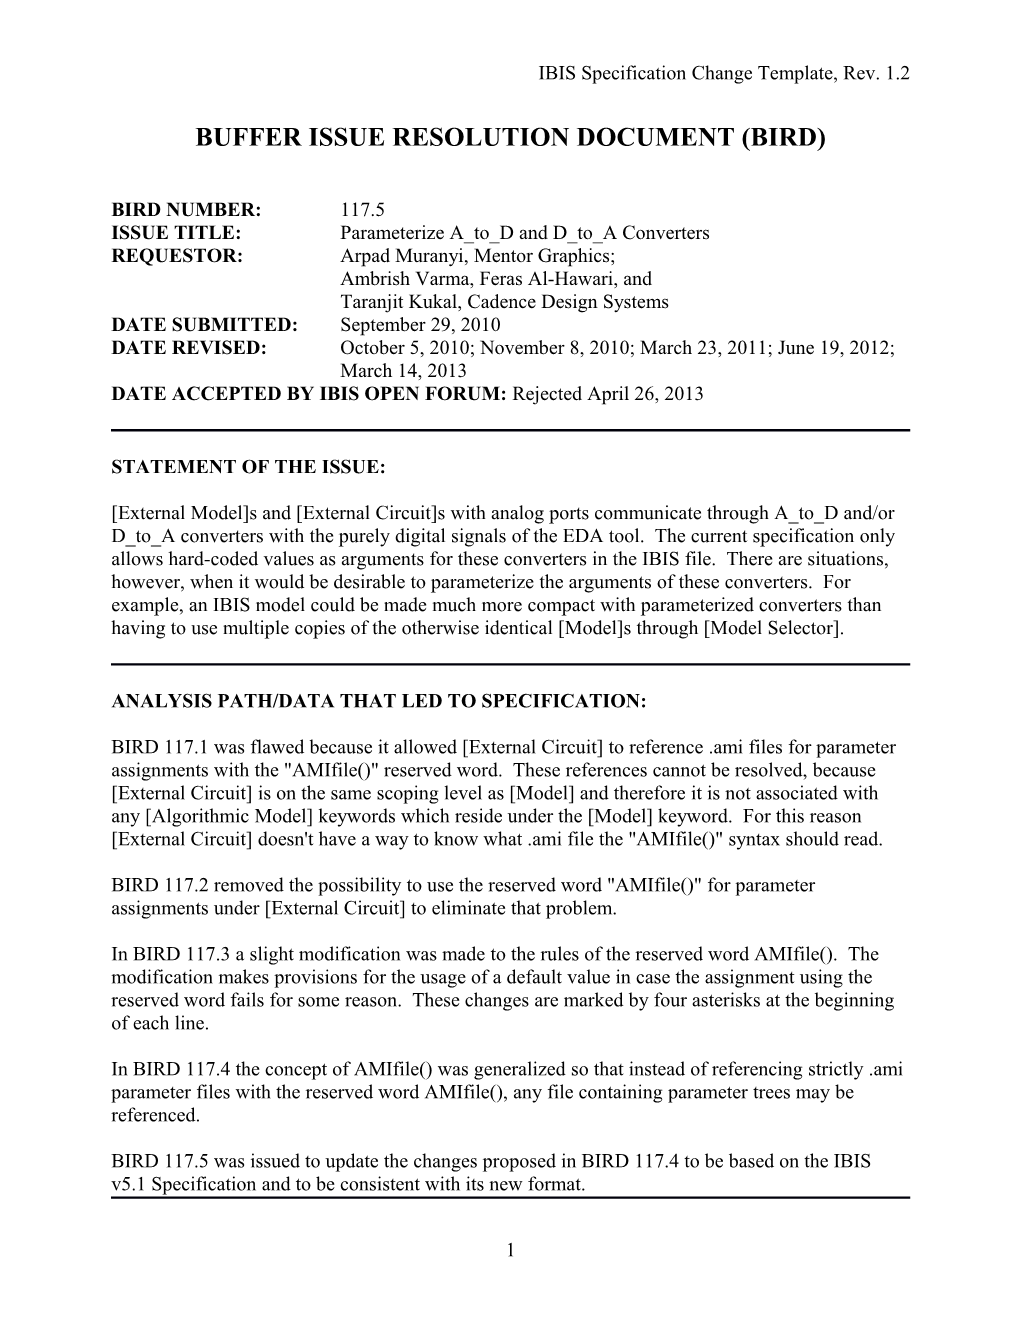 Buffer Issue Resolution Document (Bird)